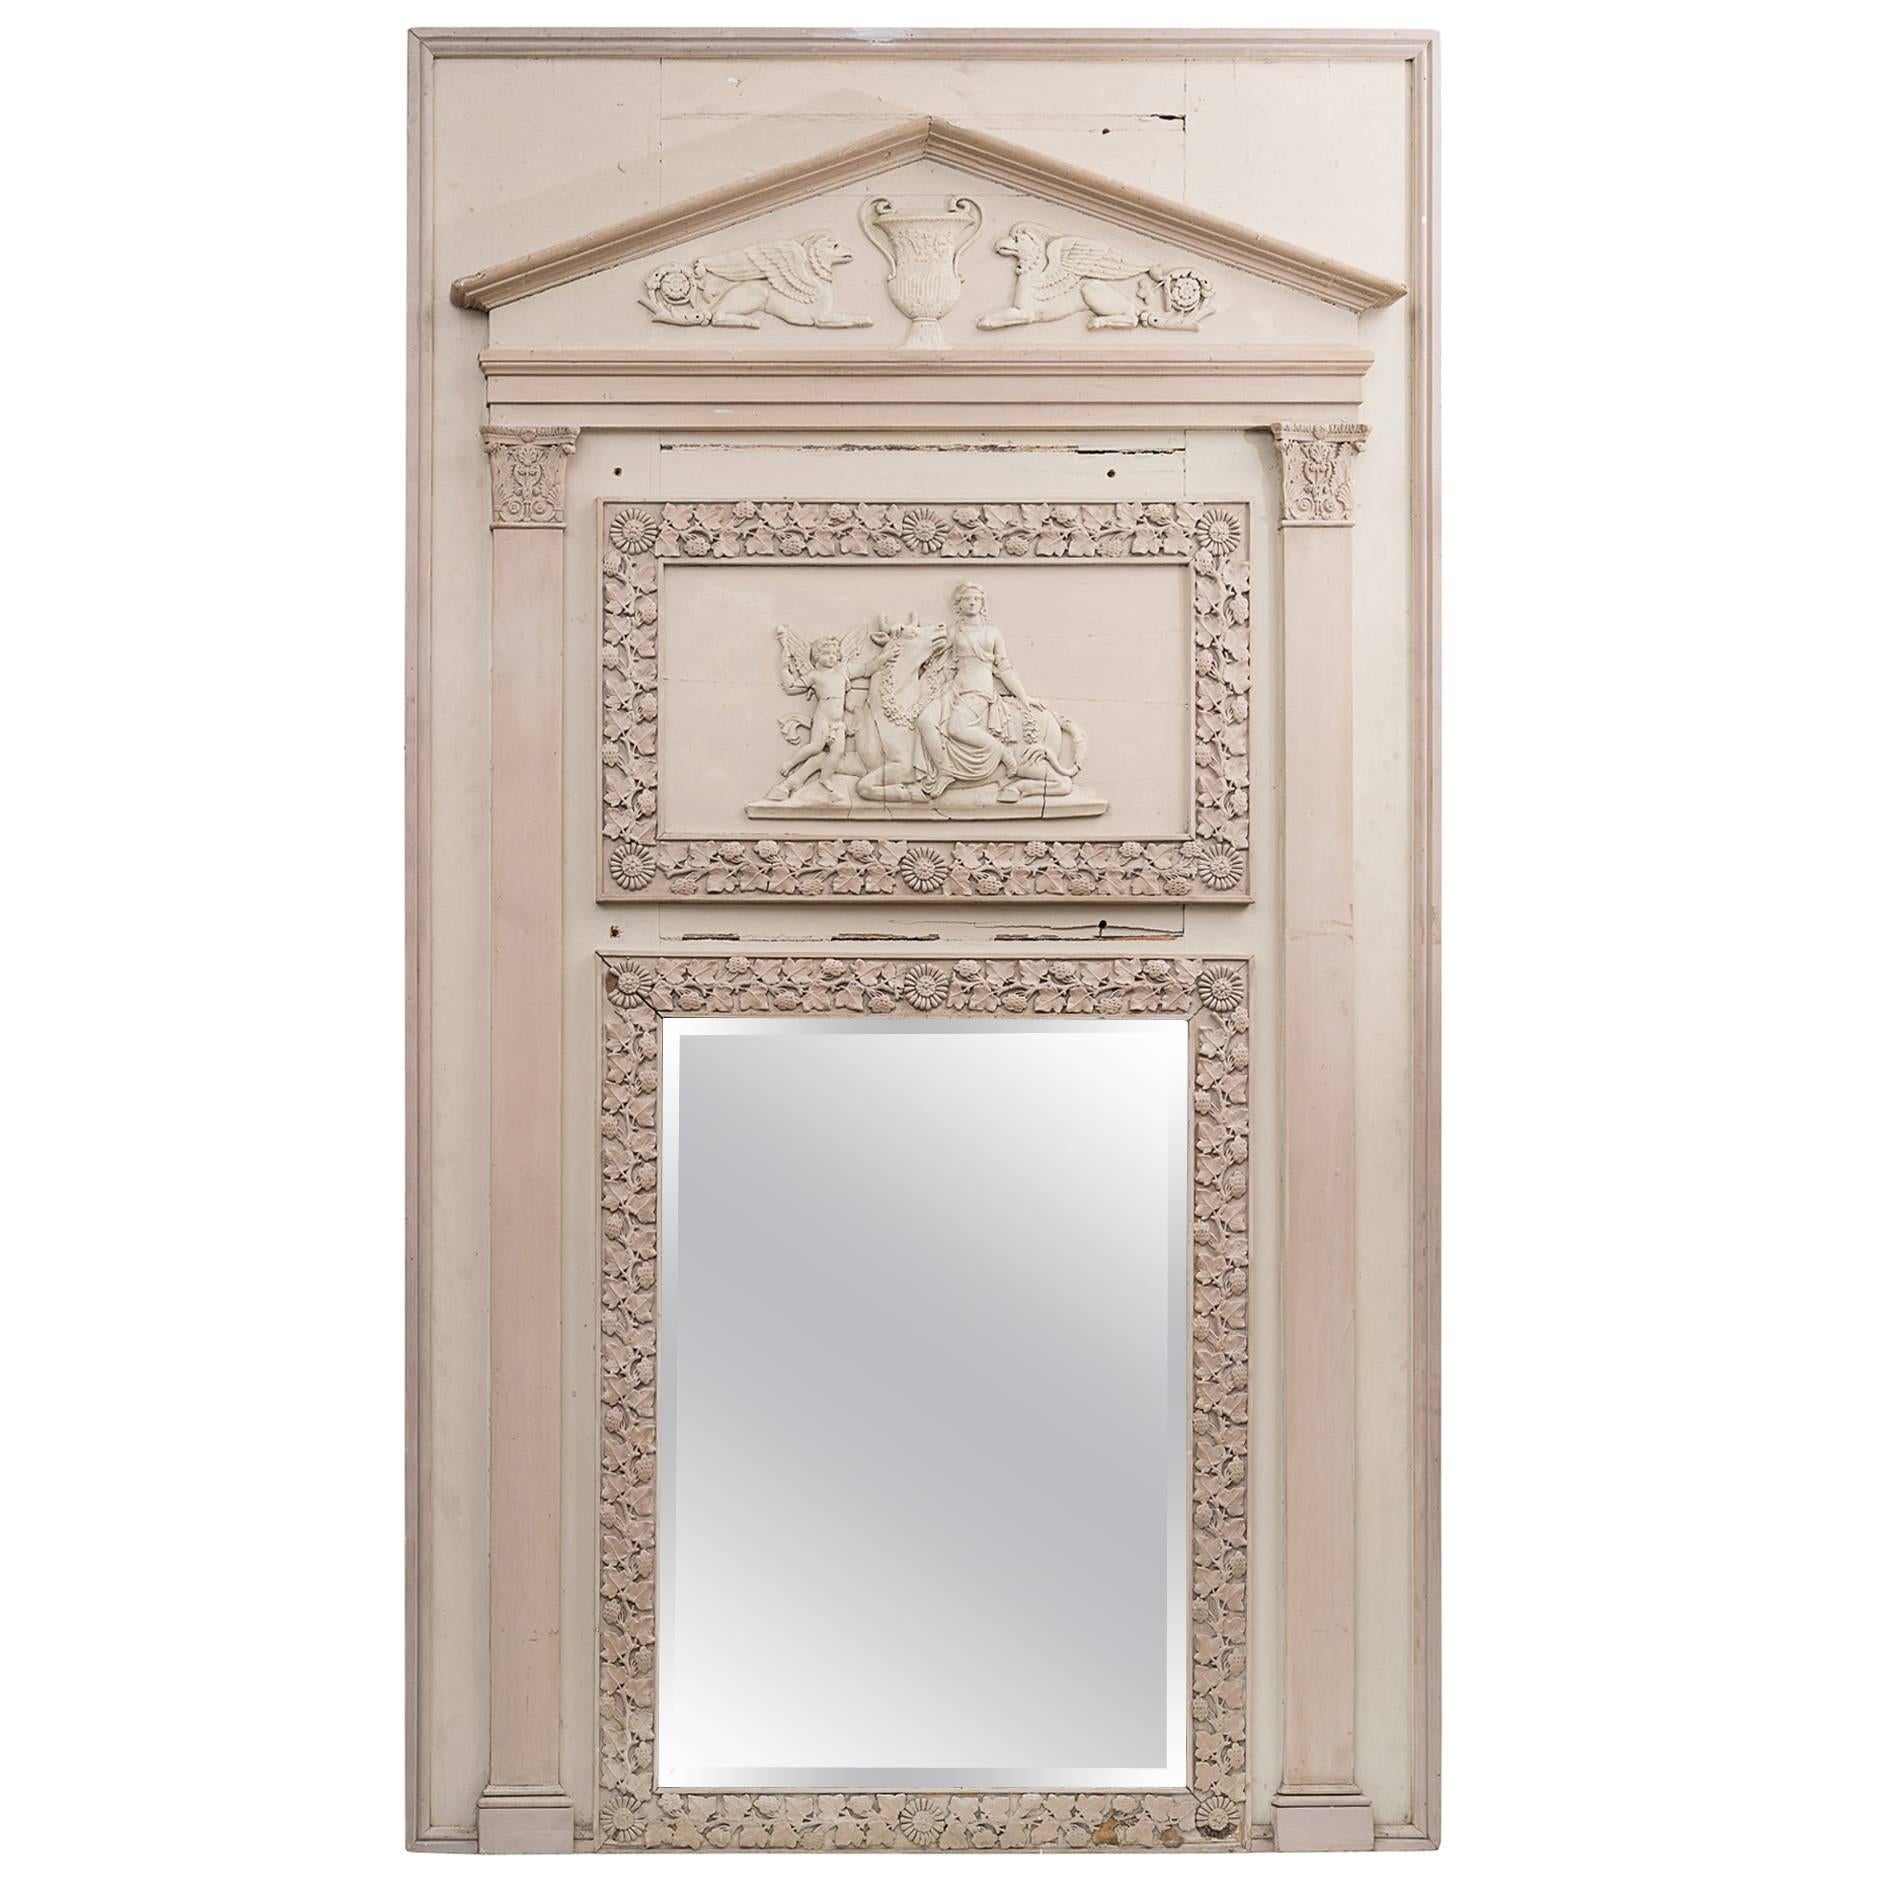 Trumeau Mirror For Sale